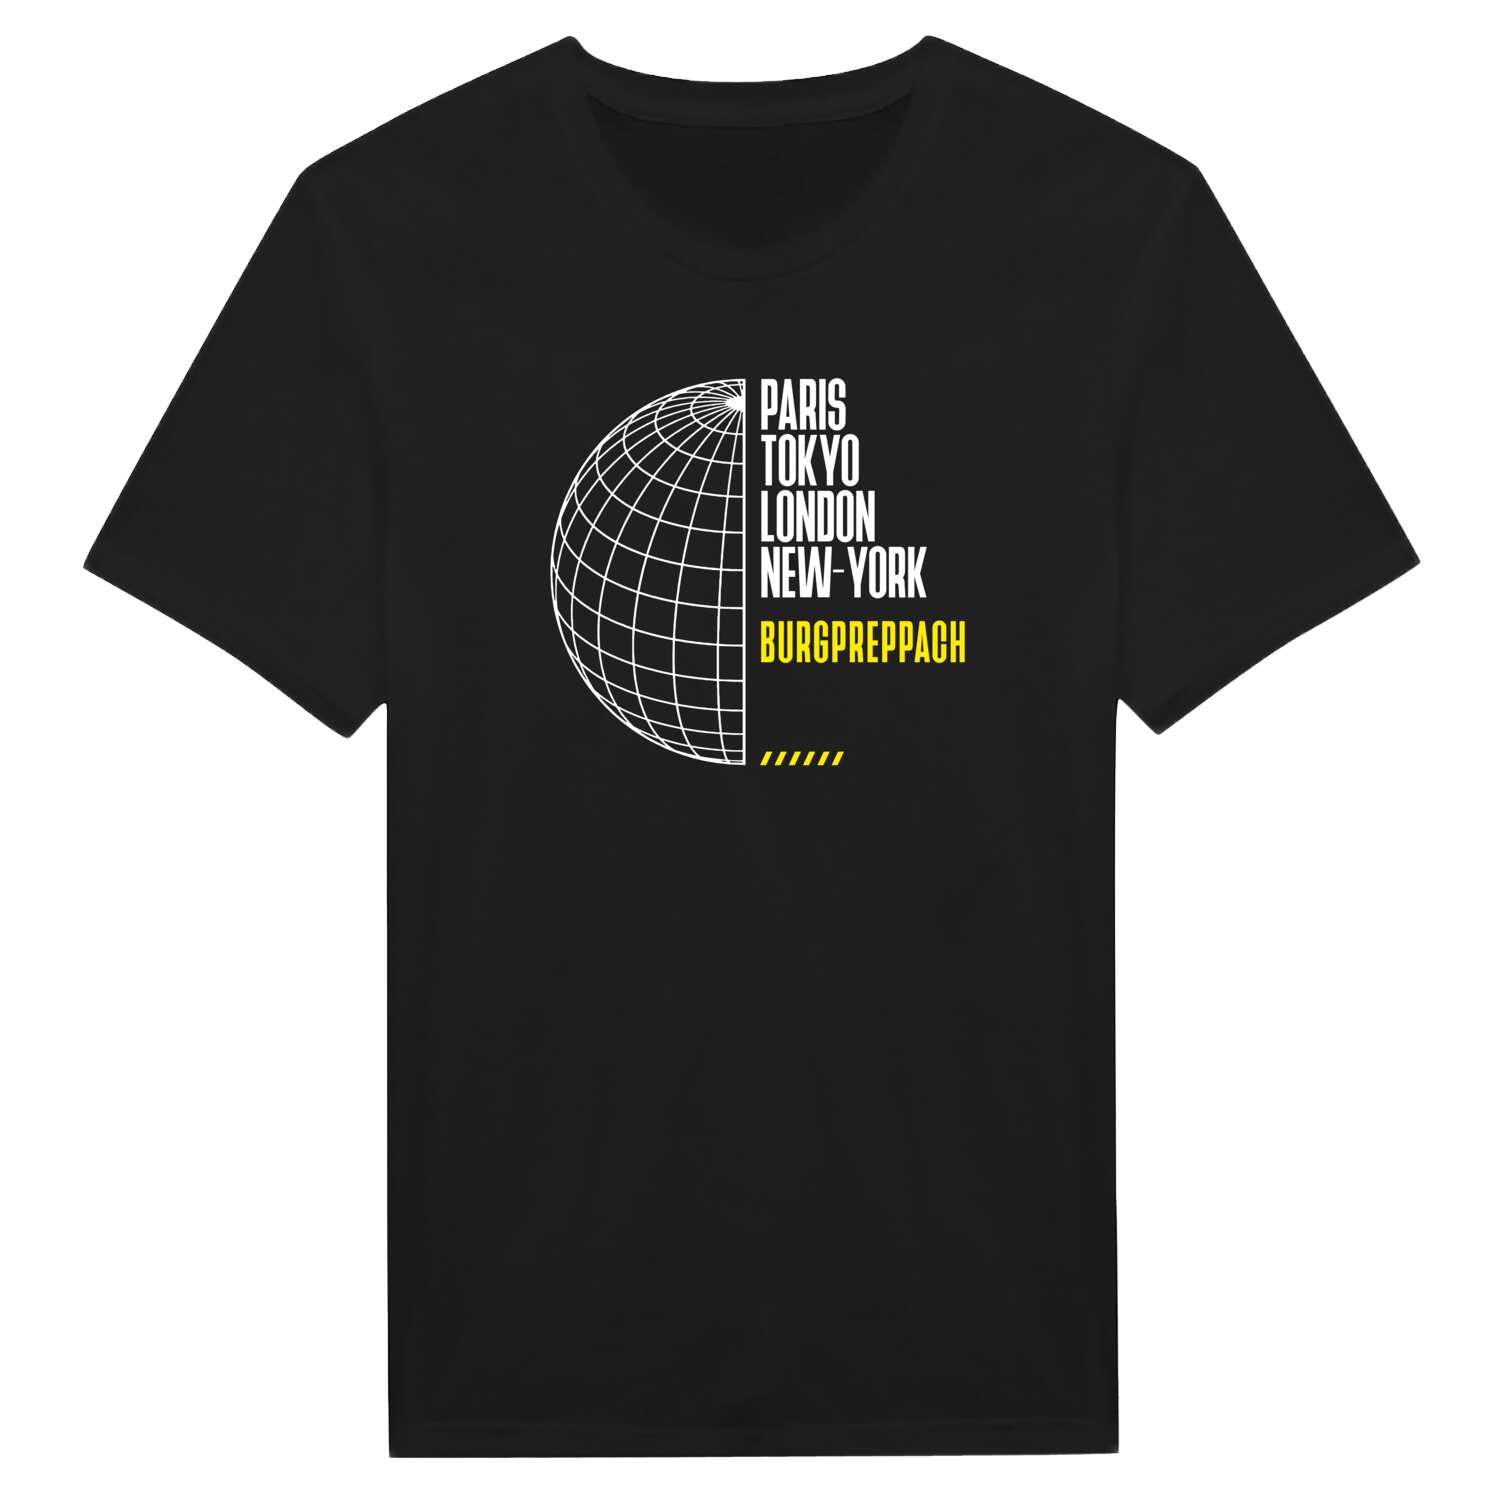 Burgpreppach T-Shirt »Paris Tokyo London«